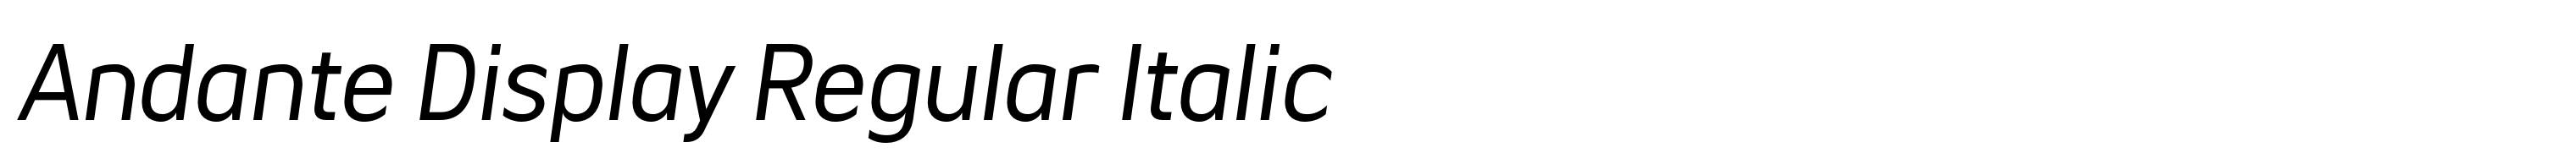 Andante Display Regular Italic